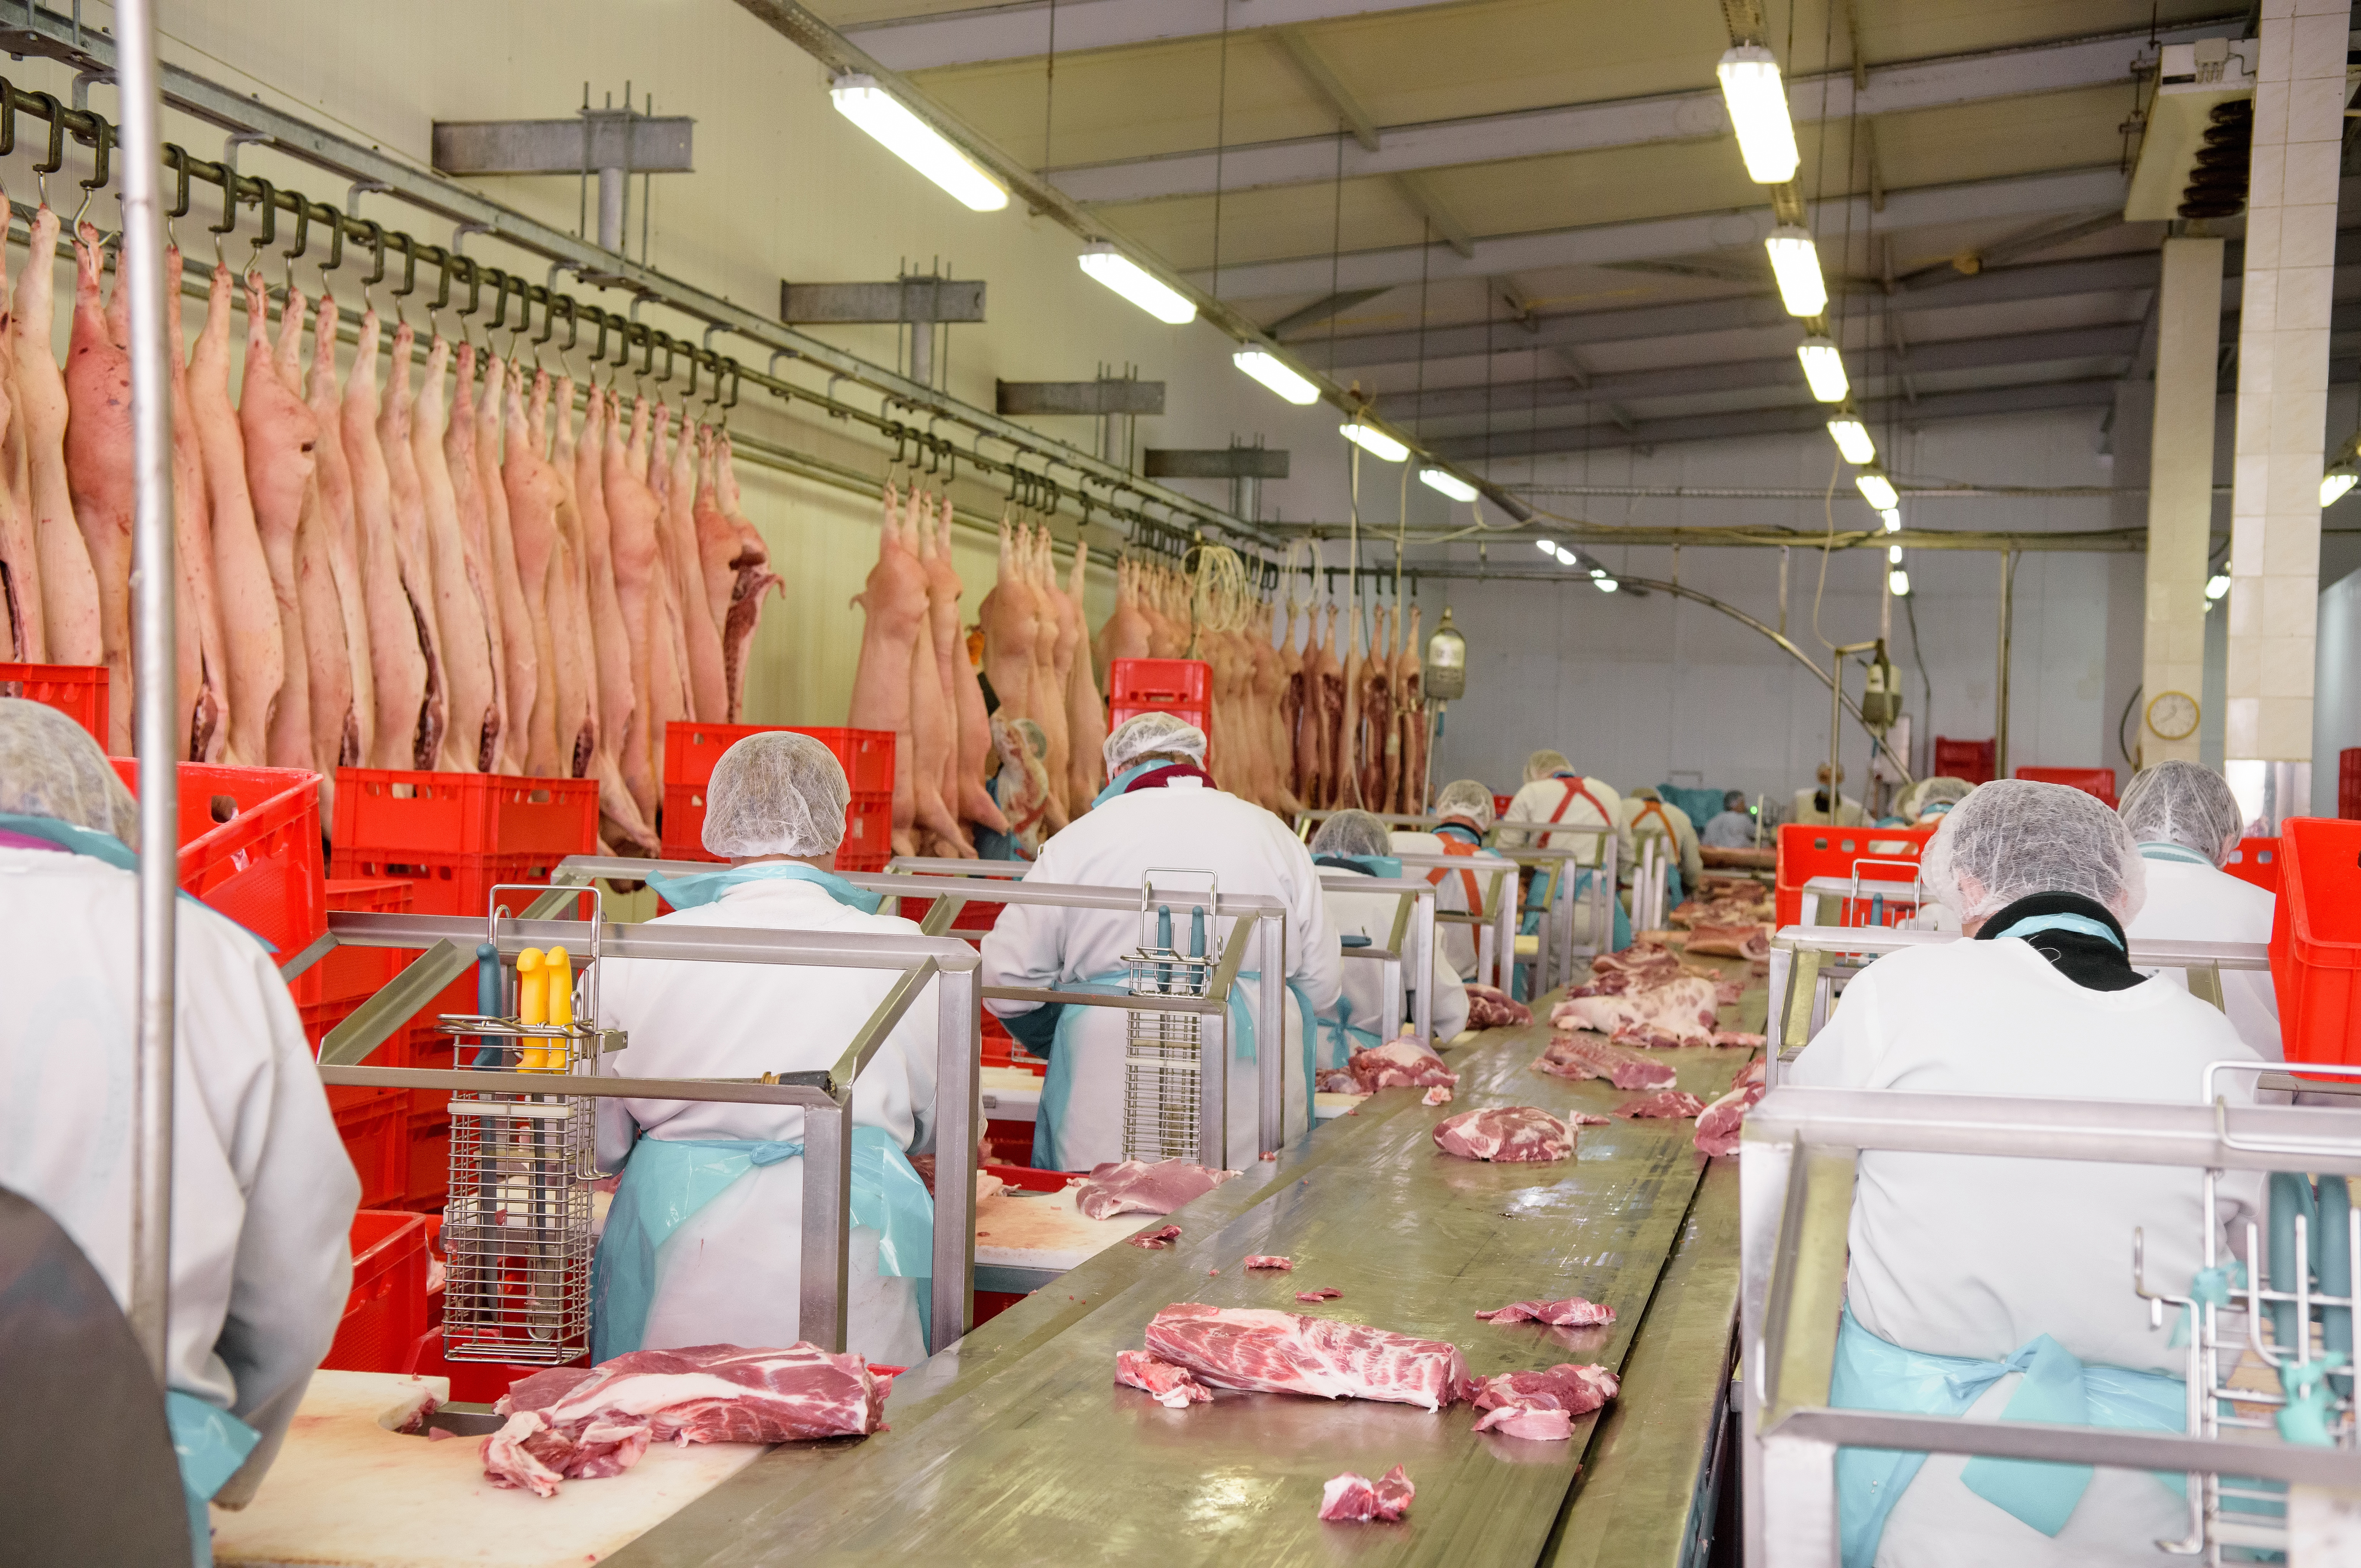 pork processing plant